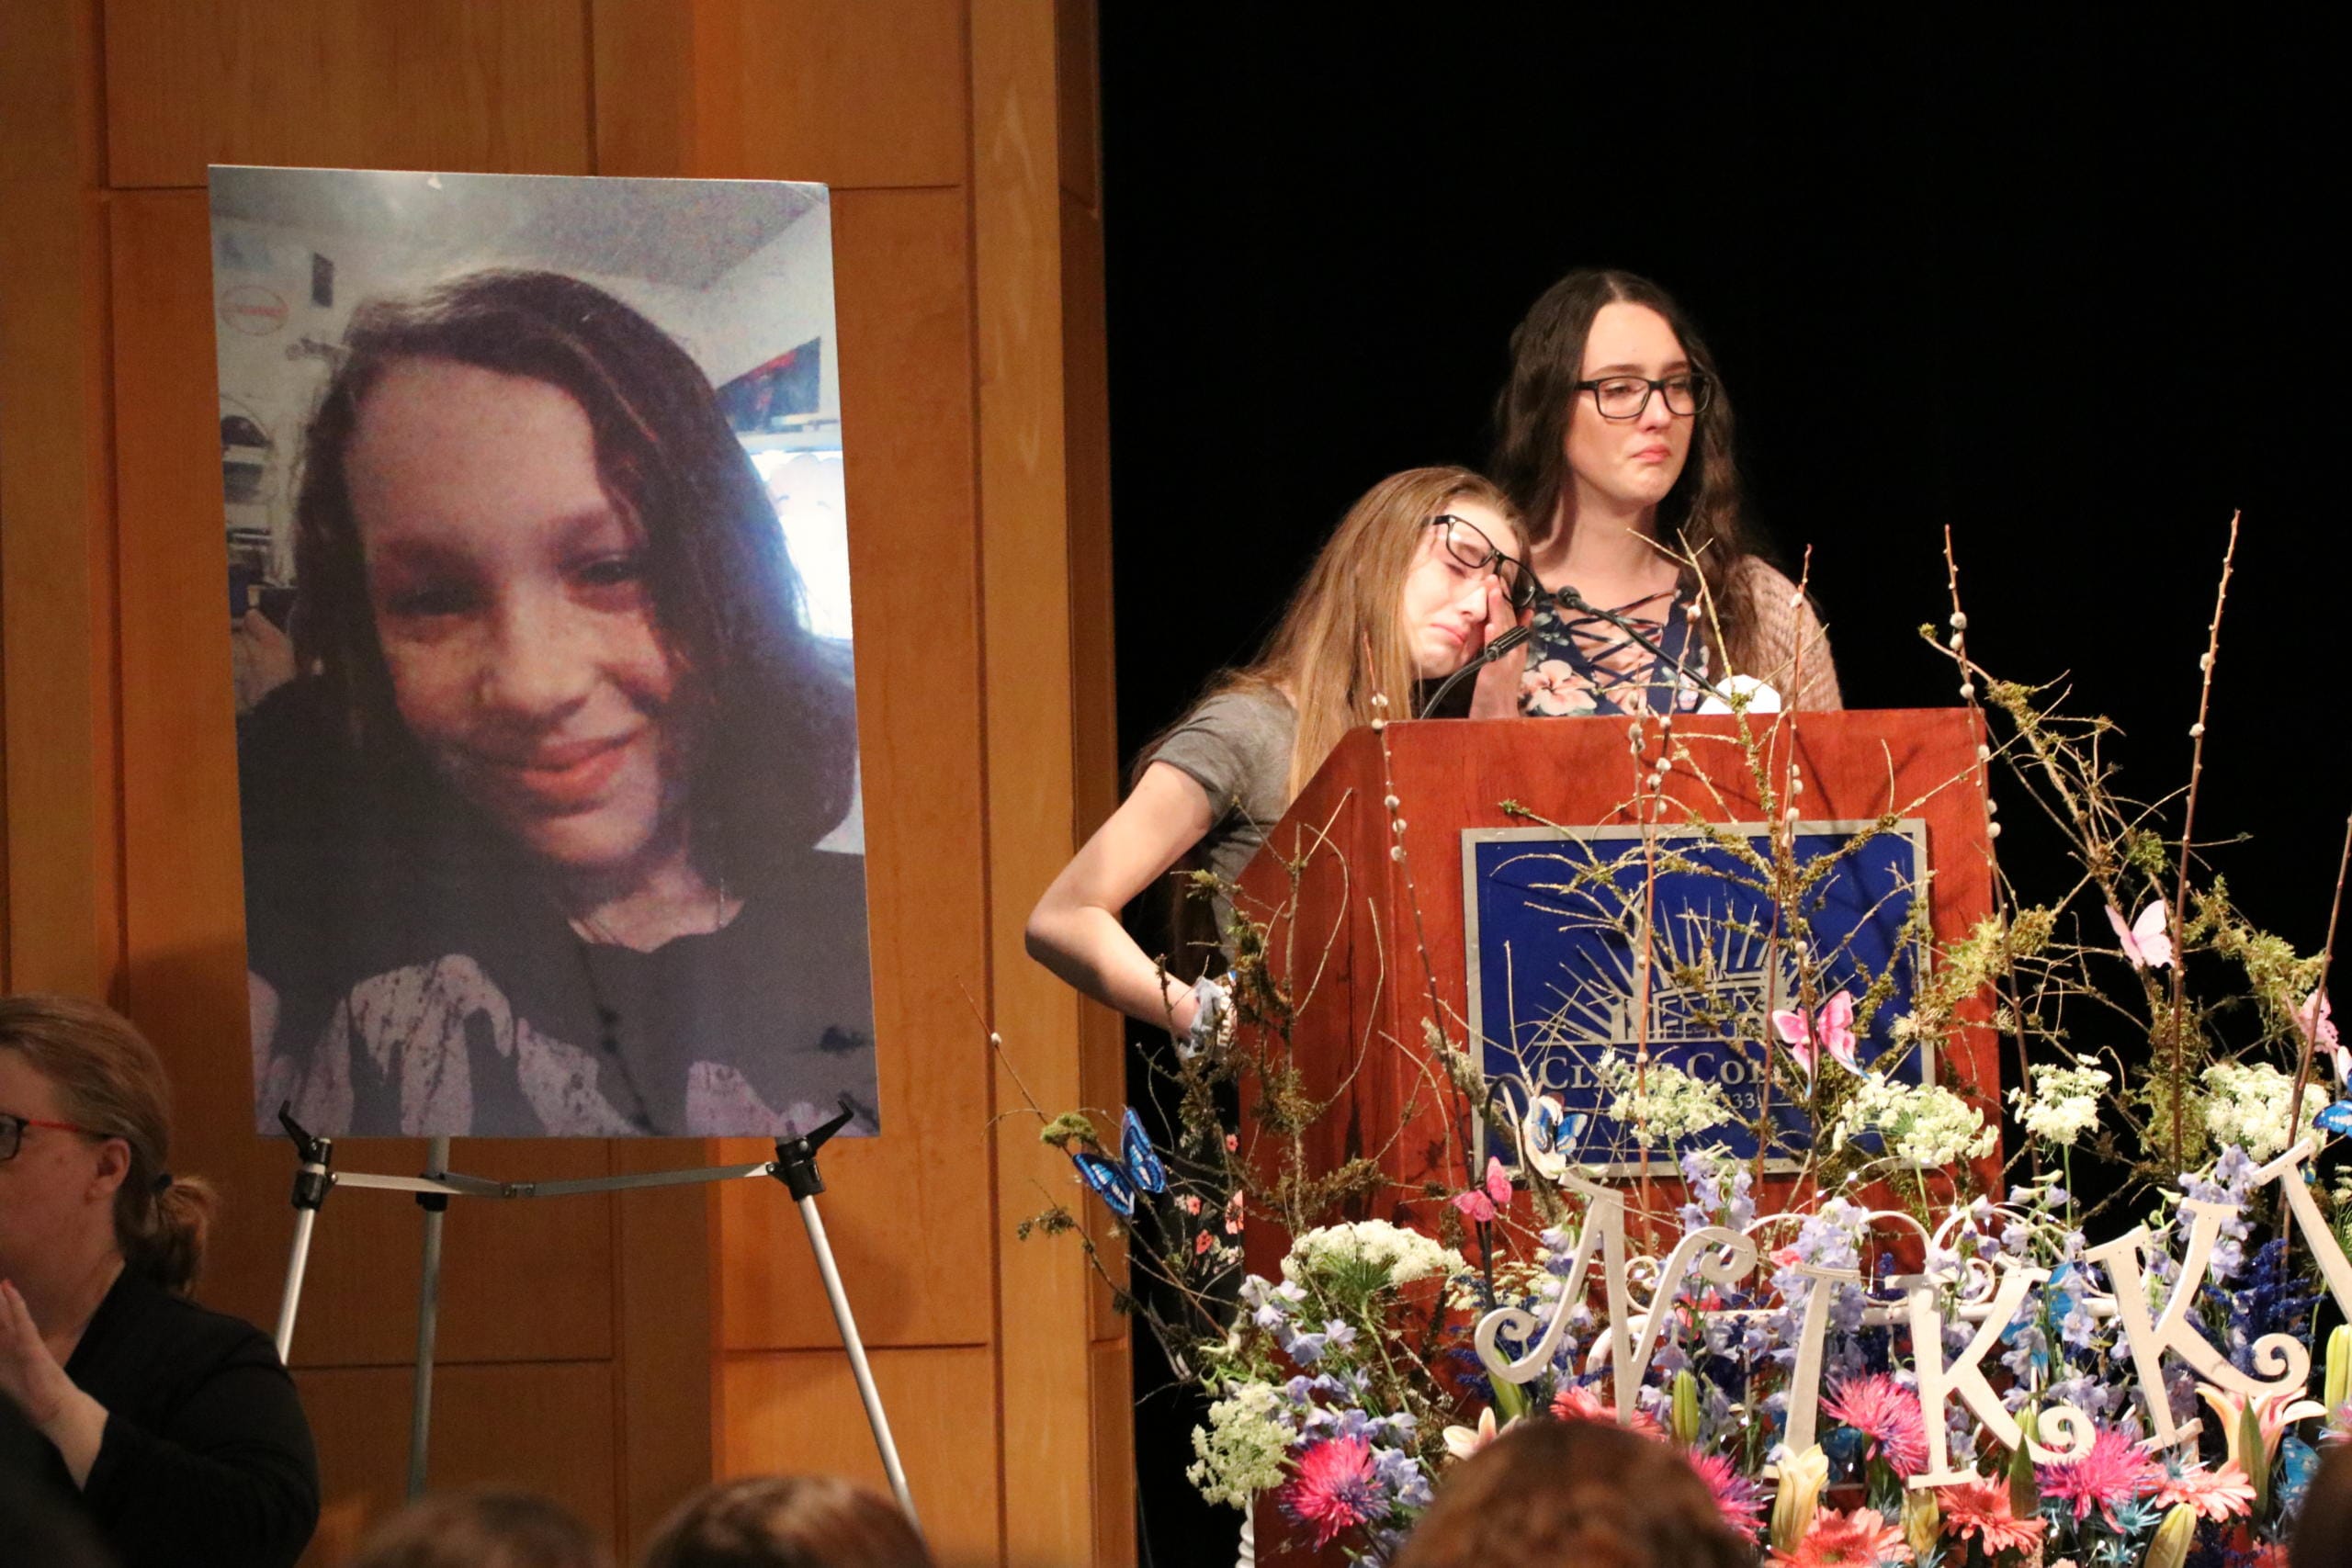 Nikki Kuhnhausen's memorial was held at Clark College on Sunday evening March 1.